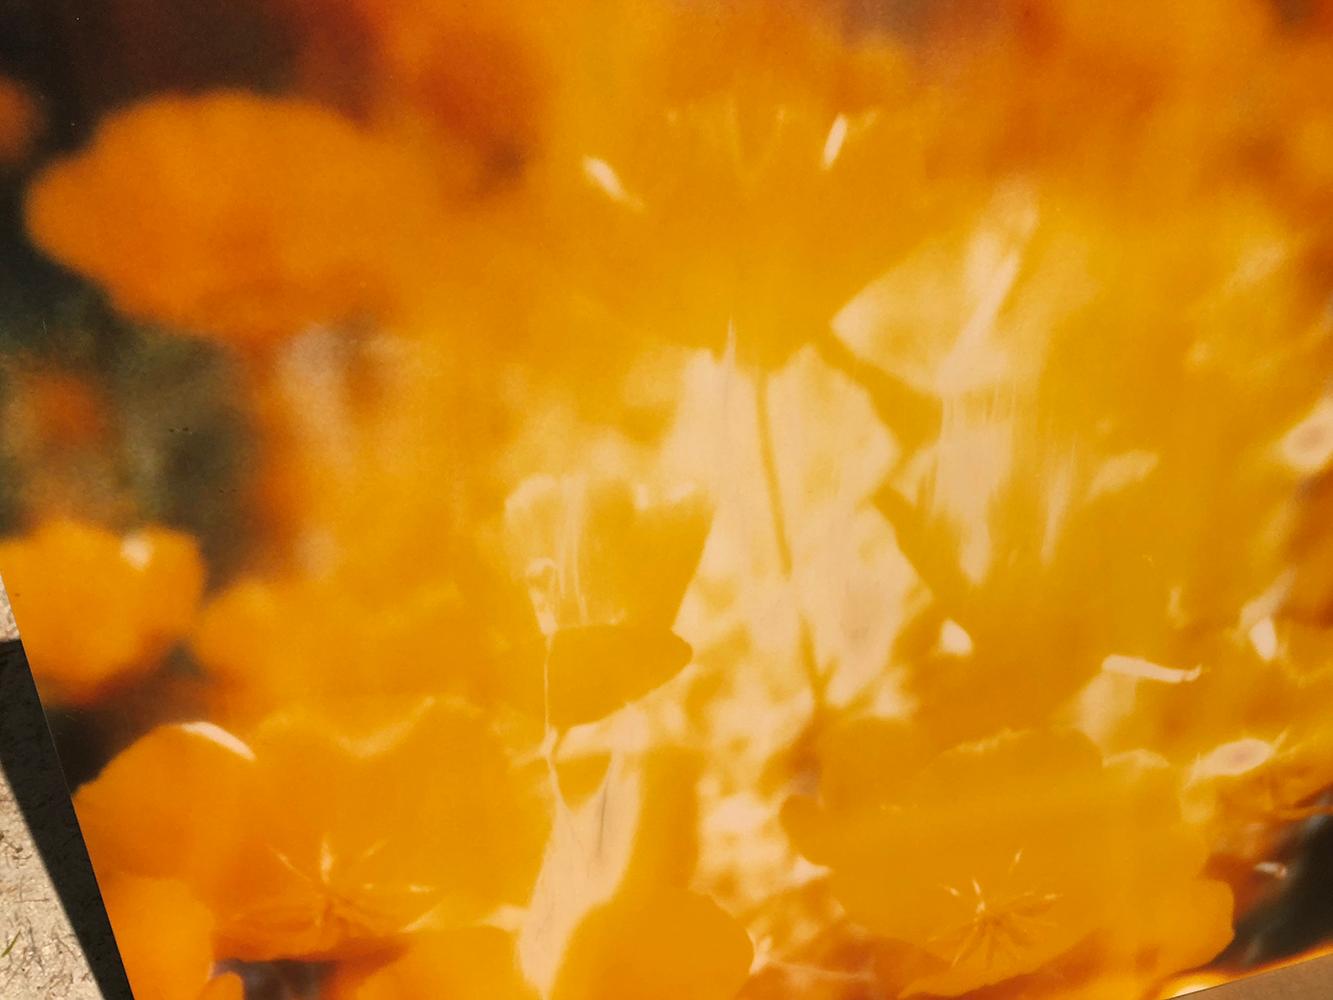 Yellow Flower (The Last Picture Show) - Polaroid - Photograph by Stefanie Schneider